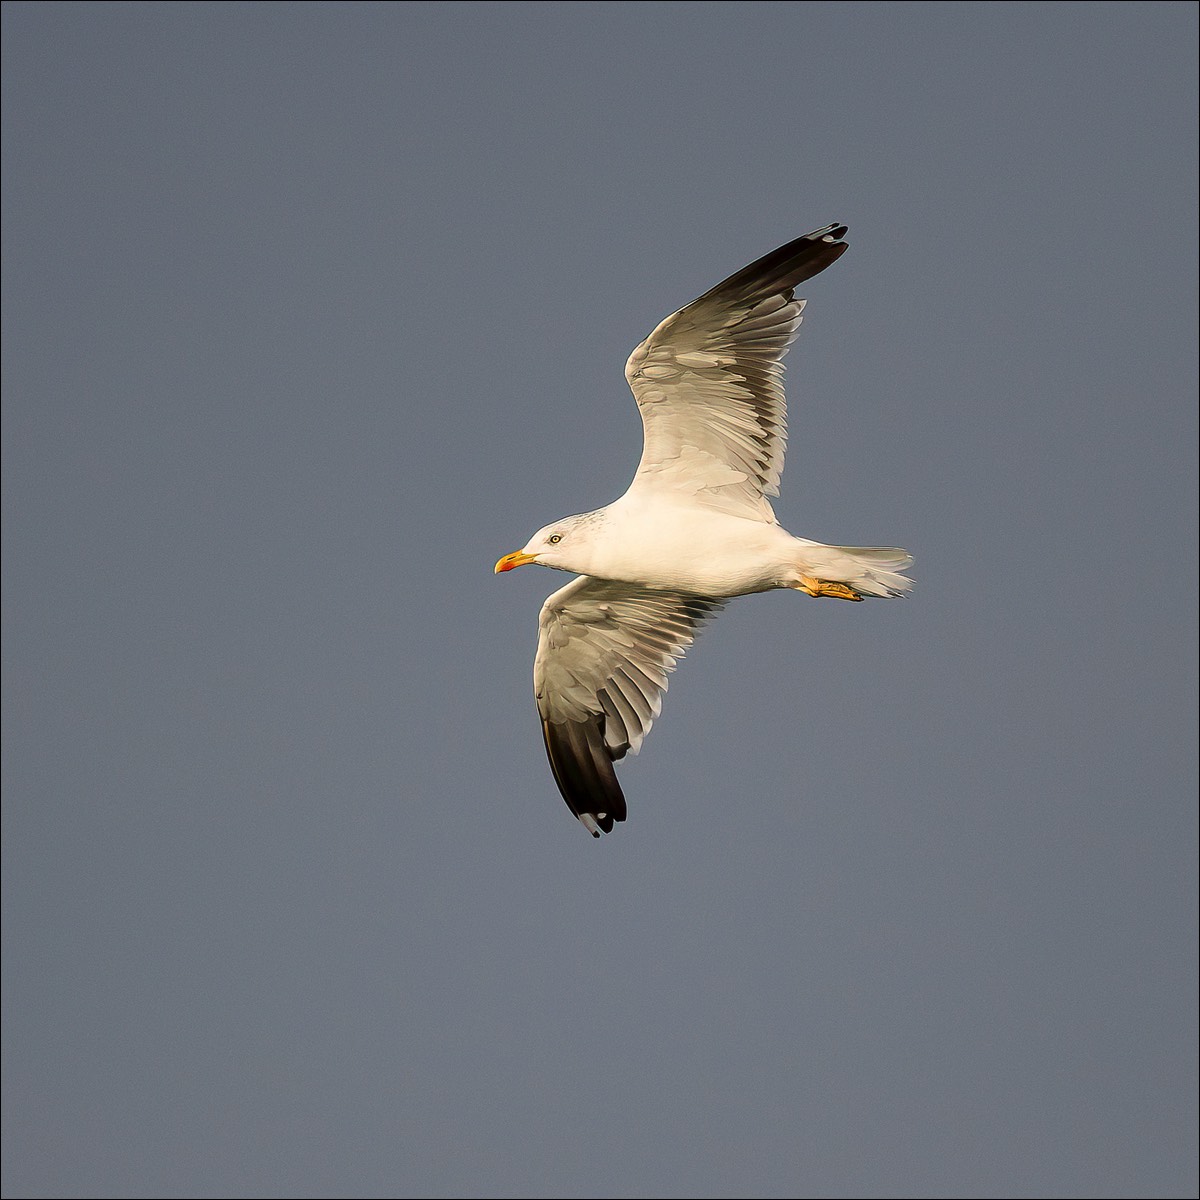 Lesser Black-backed Gull (Kleine Mantelmeeuw) - Uitkerke (Belgium) - 23/09/21